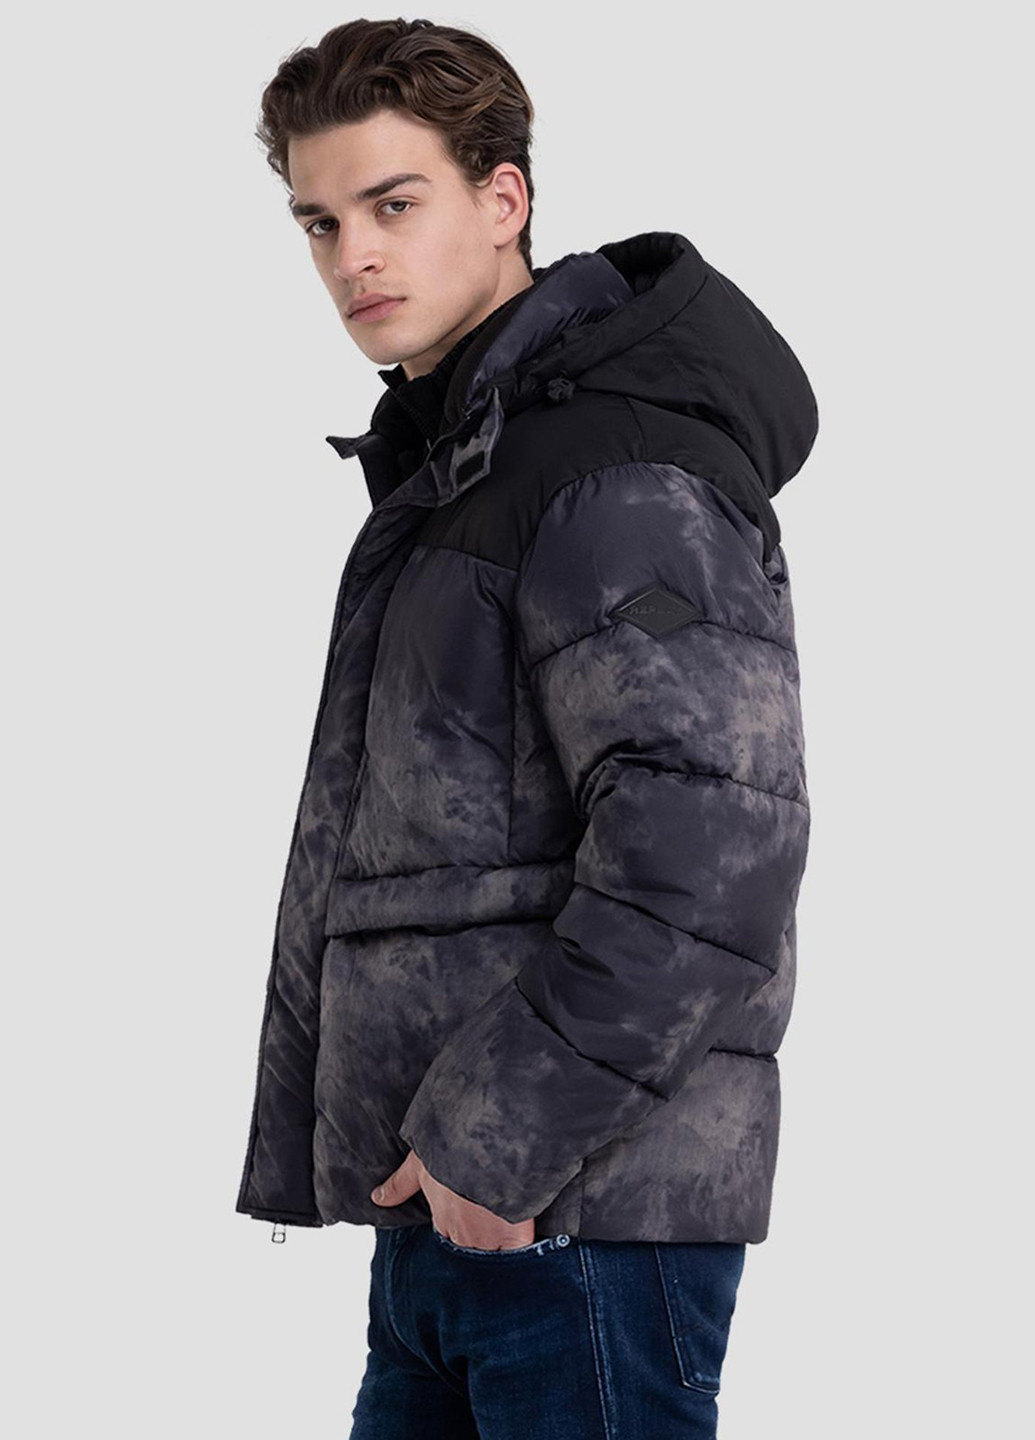 Темно-серая зимняя куртка Replay